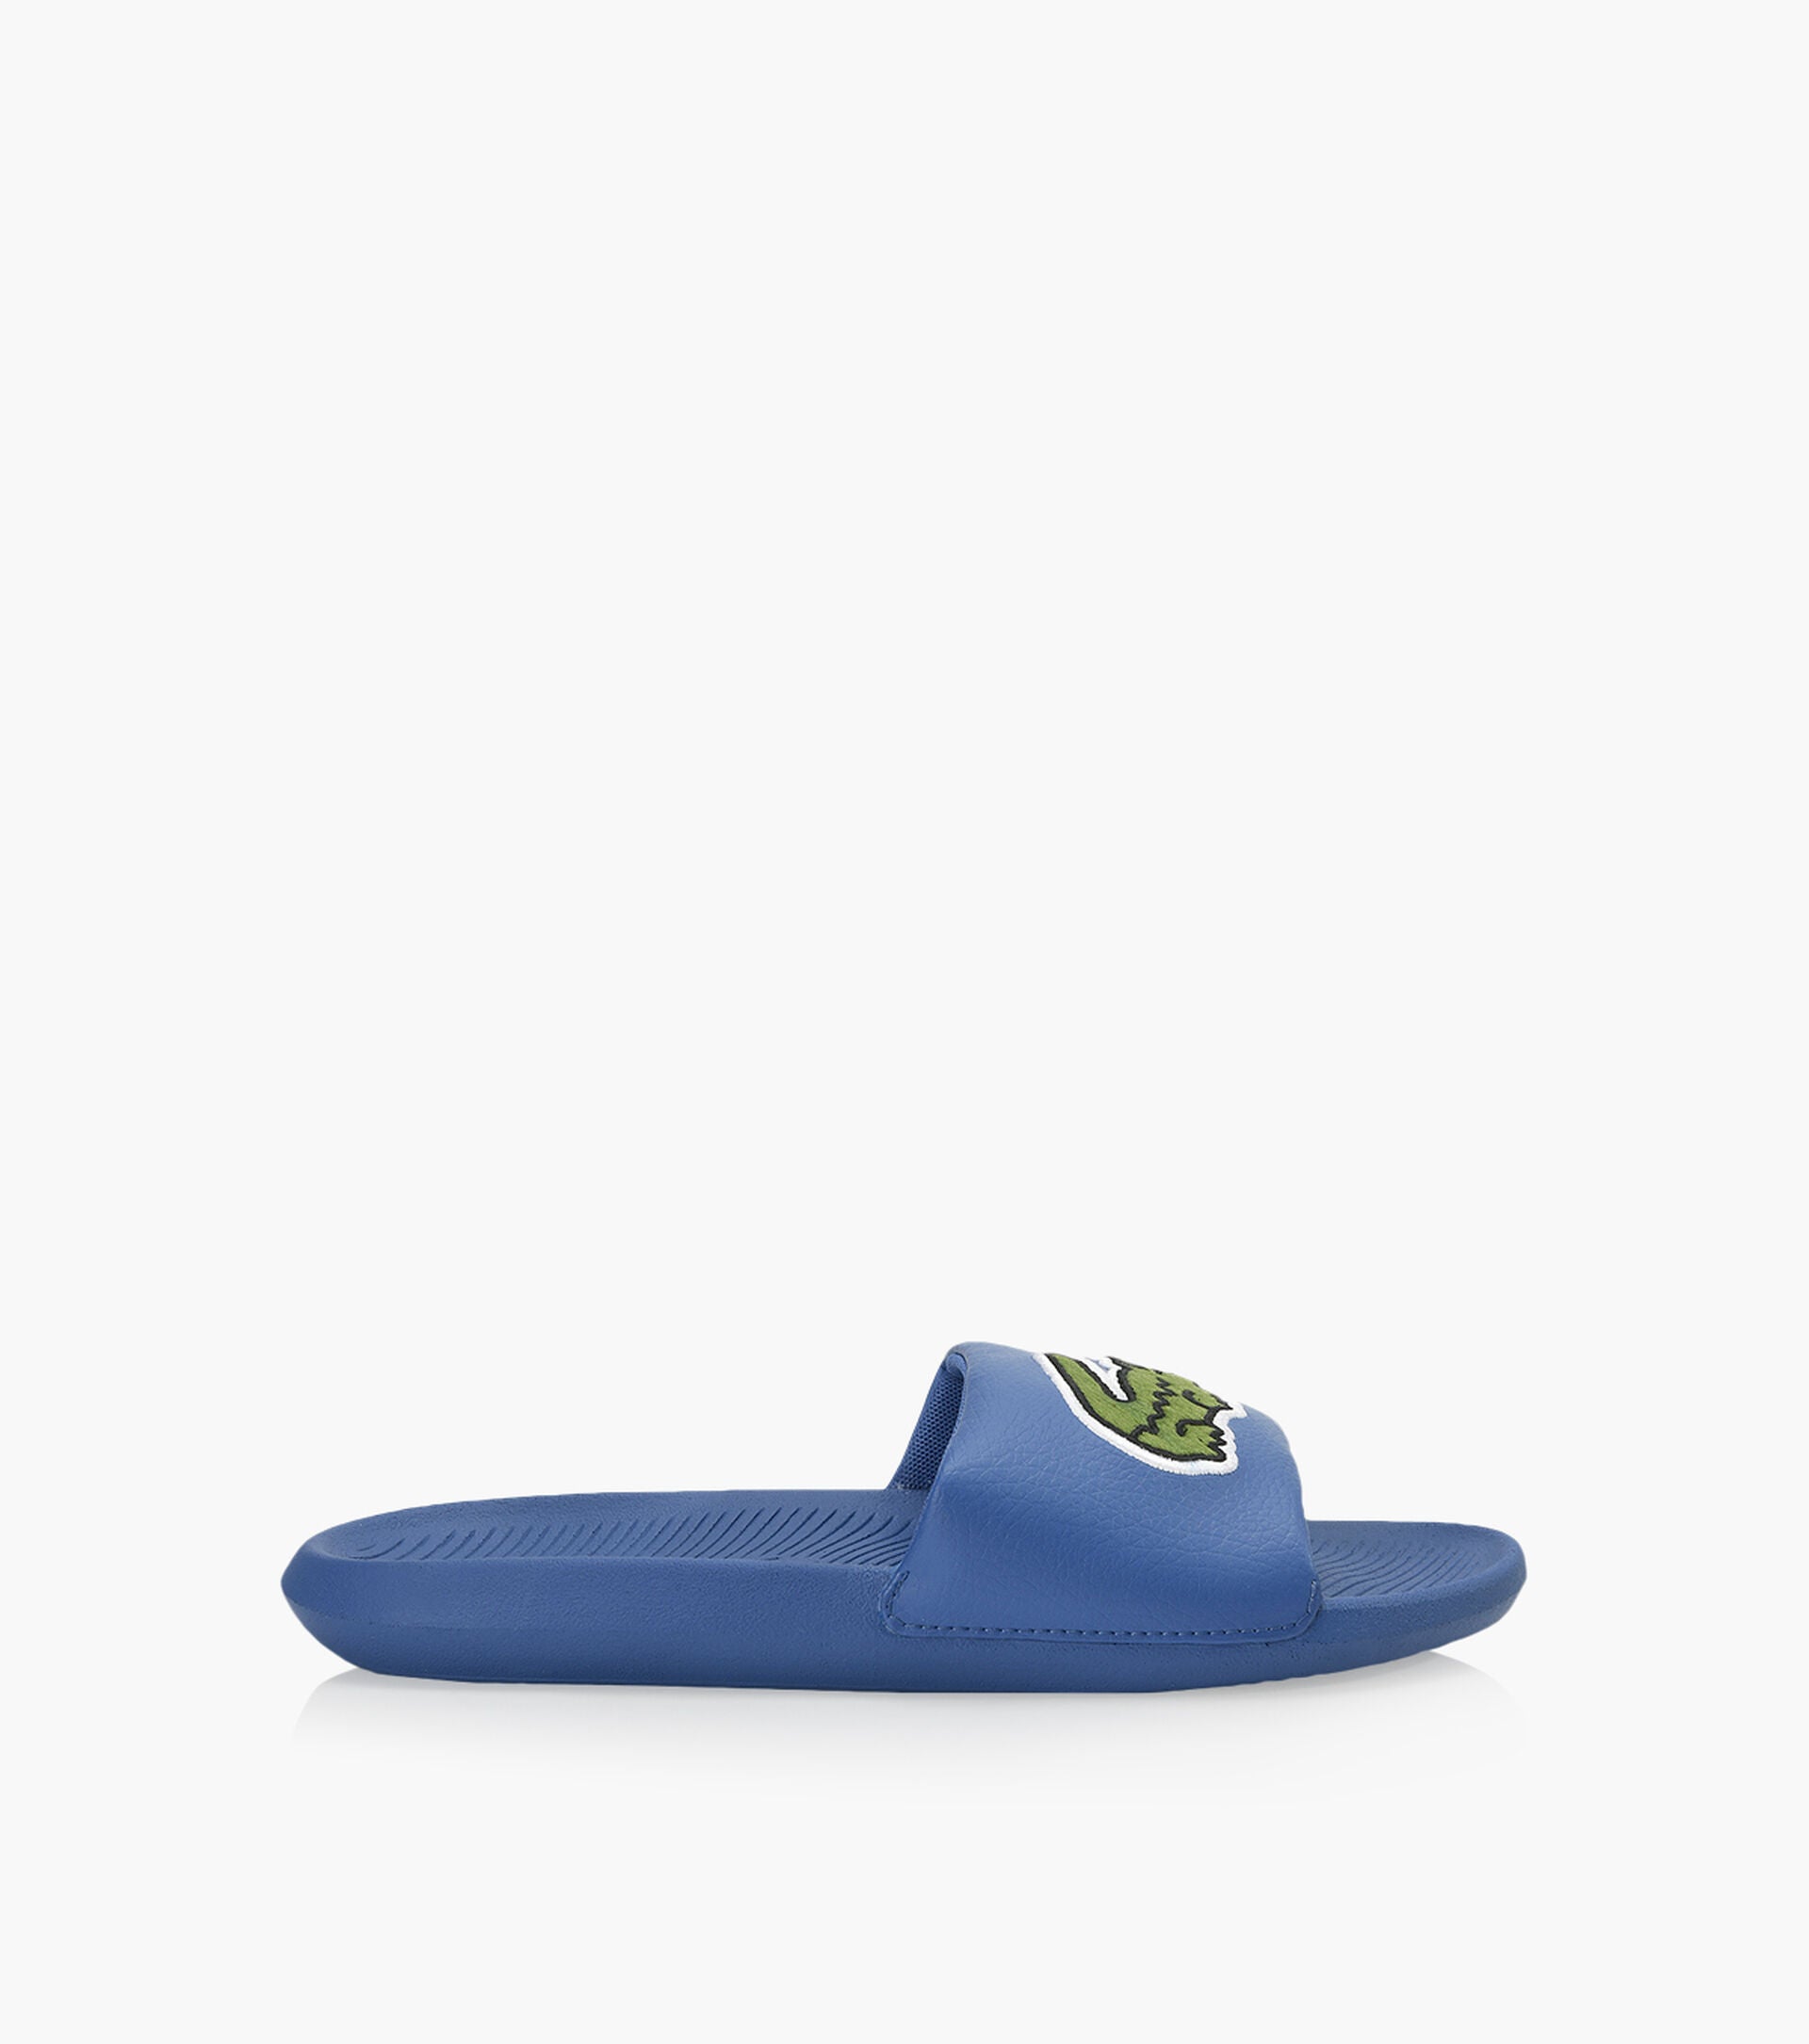 Croco Slides Blue/Green